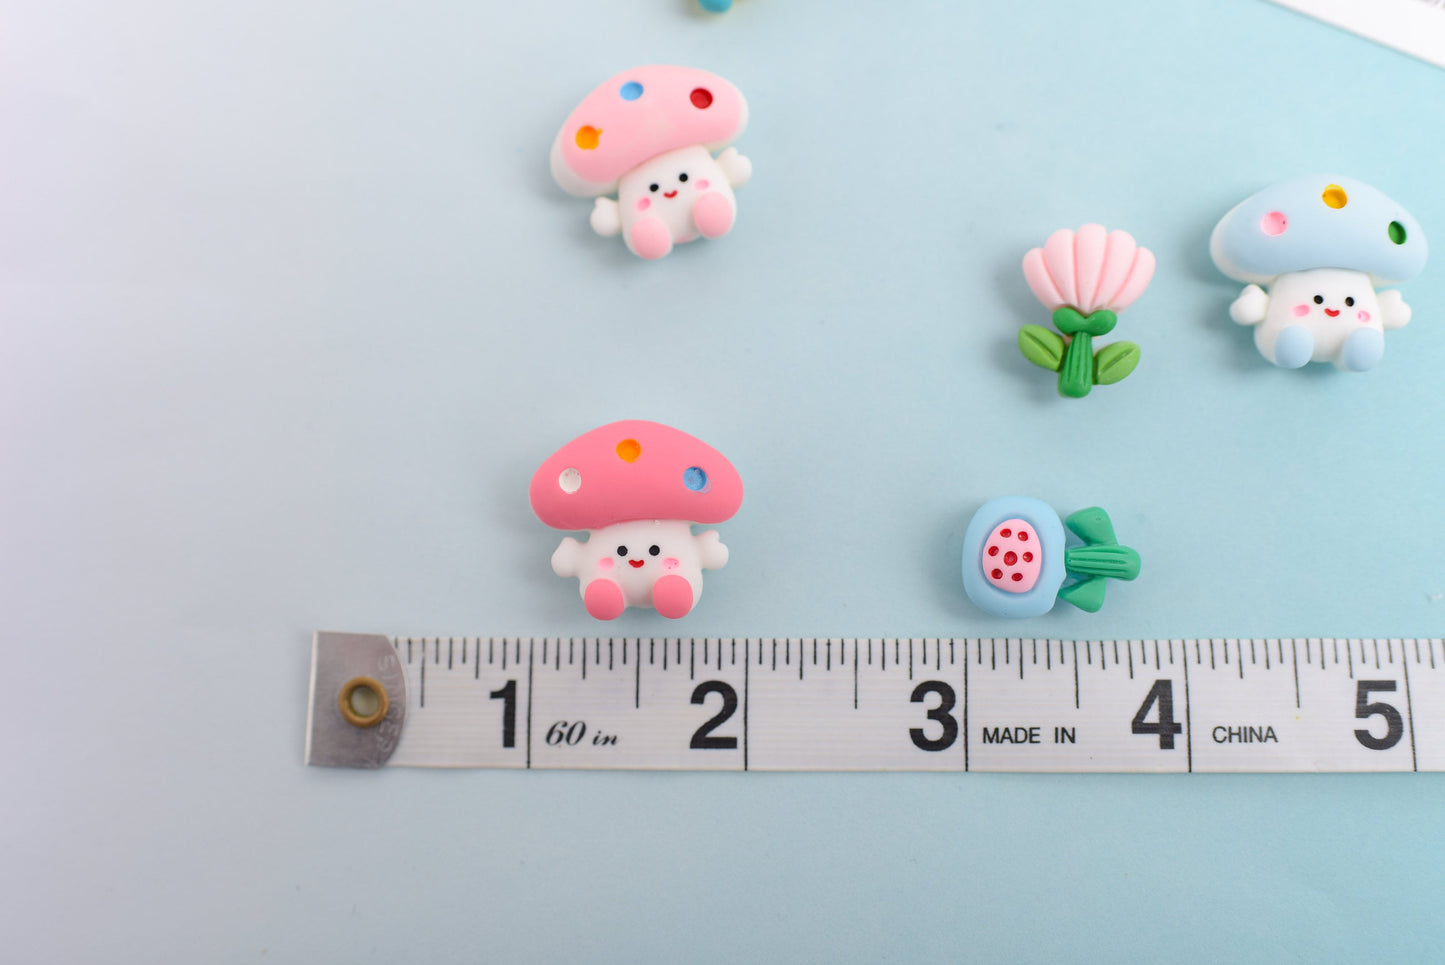 Mushroom & Flower Magnets- Set of 10